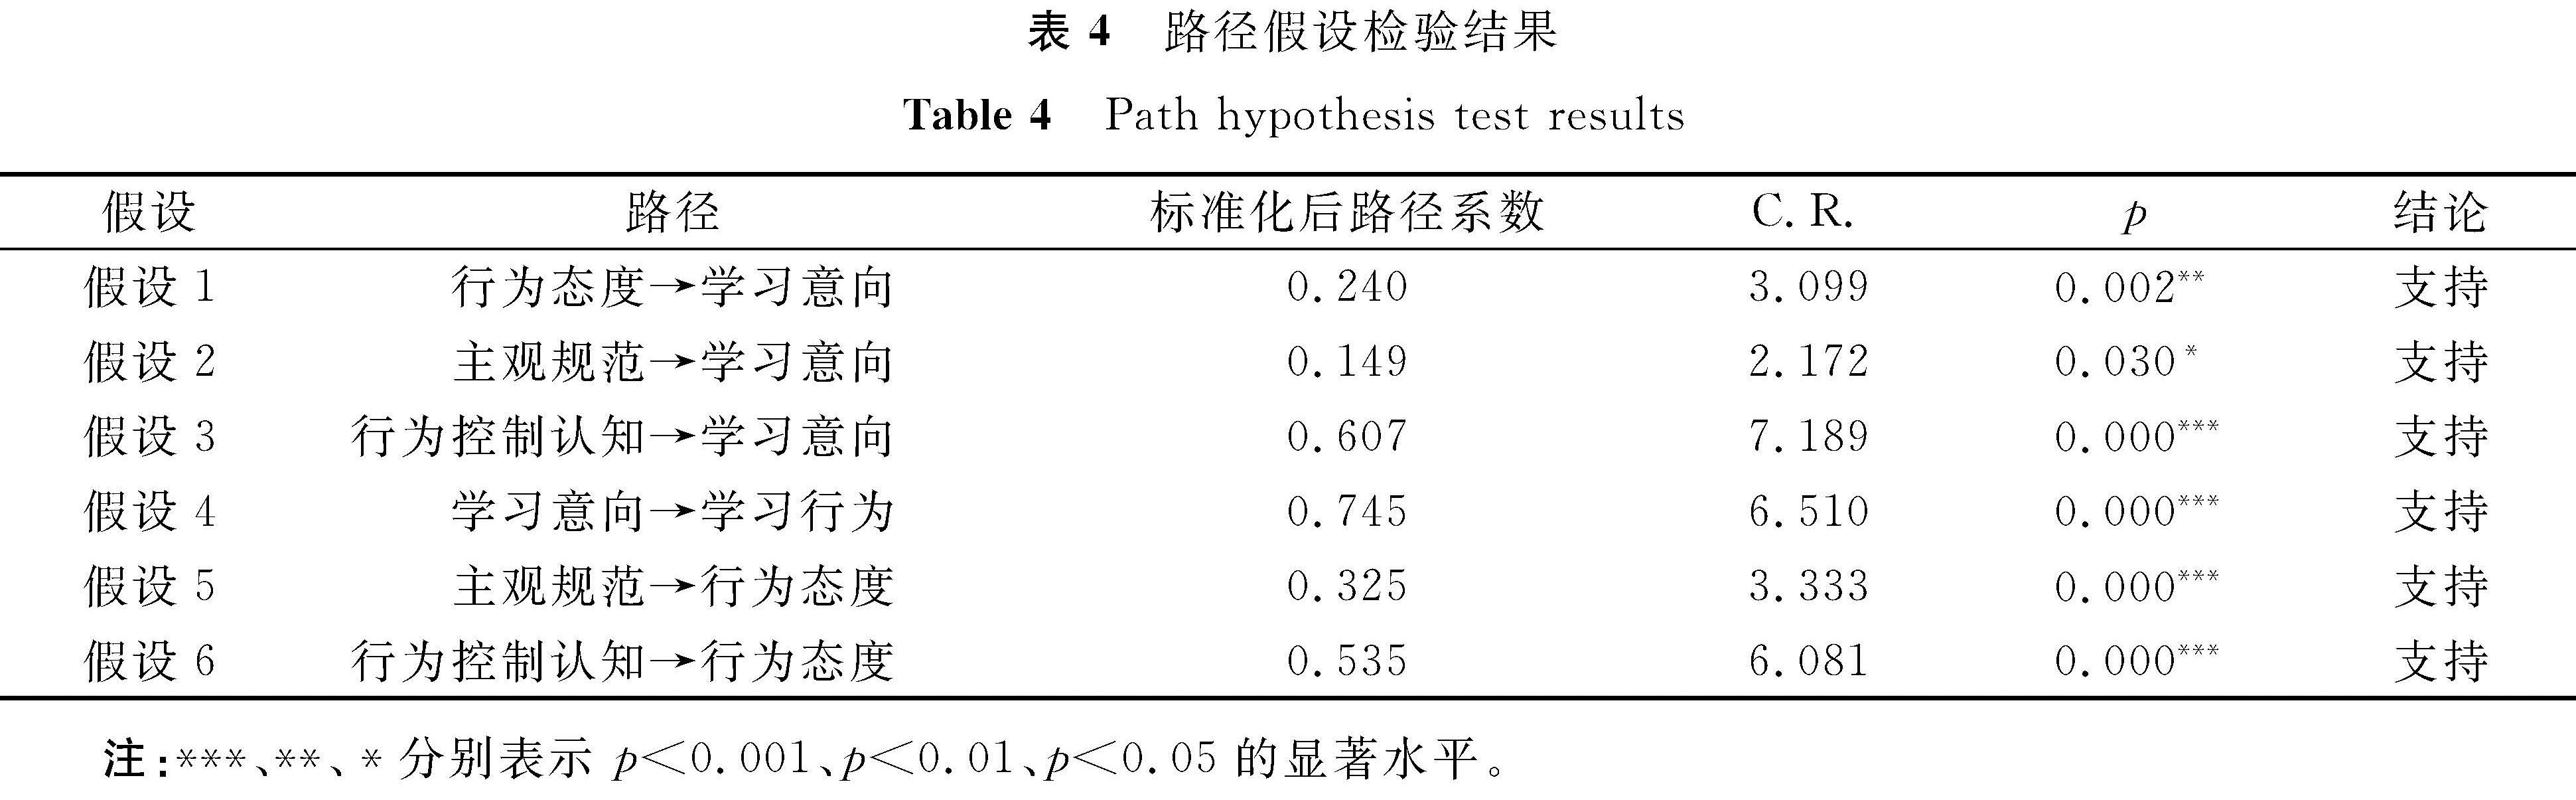 表4 路径假设检验结果<br/>Table 4 Path hypothesis test results